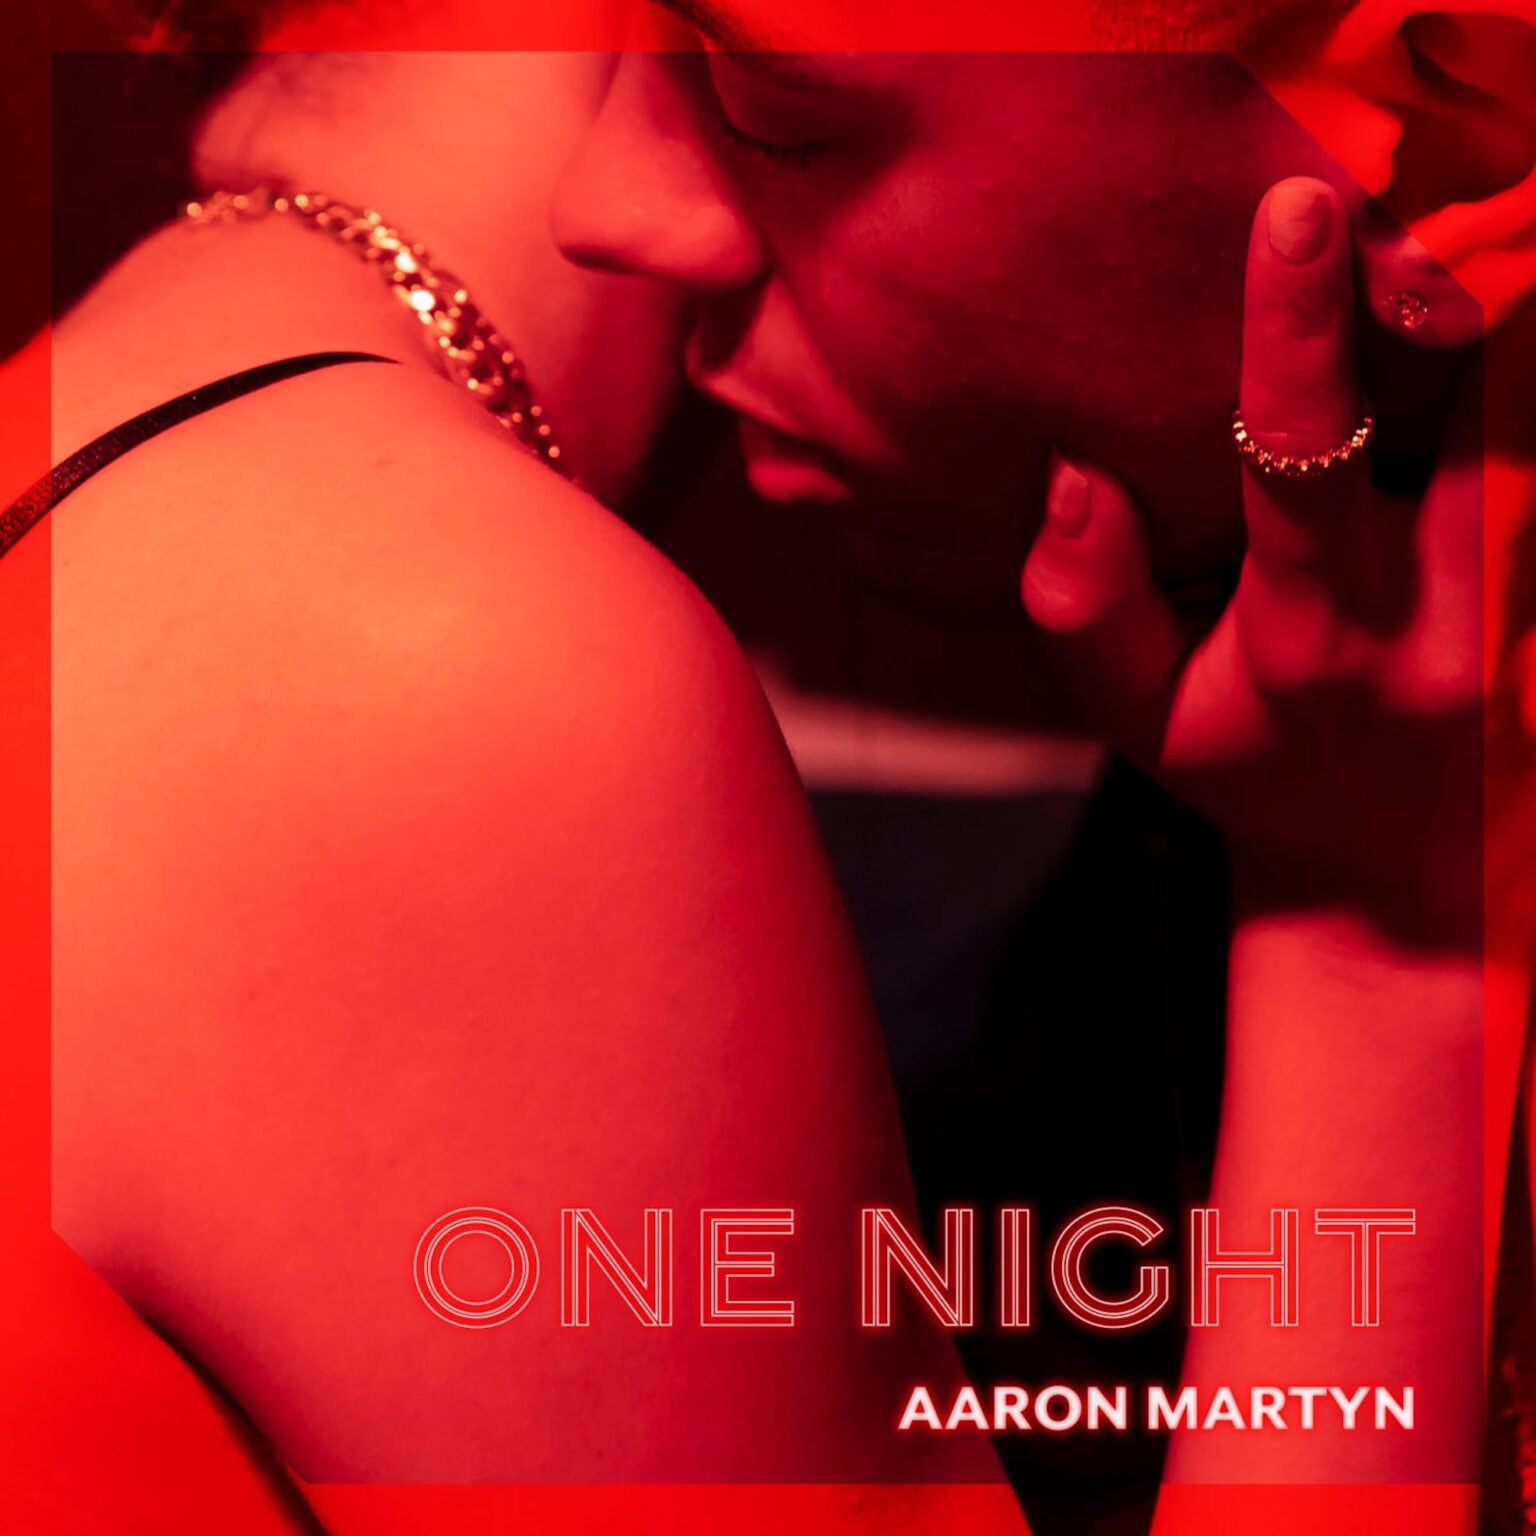 Aaron Martyn Releases New Single 'One Night'